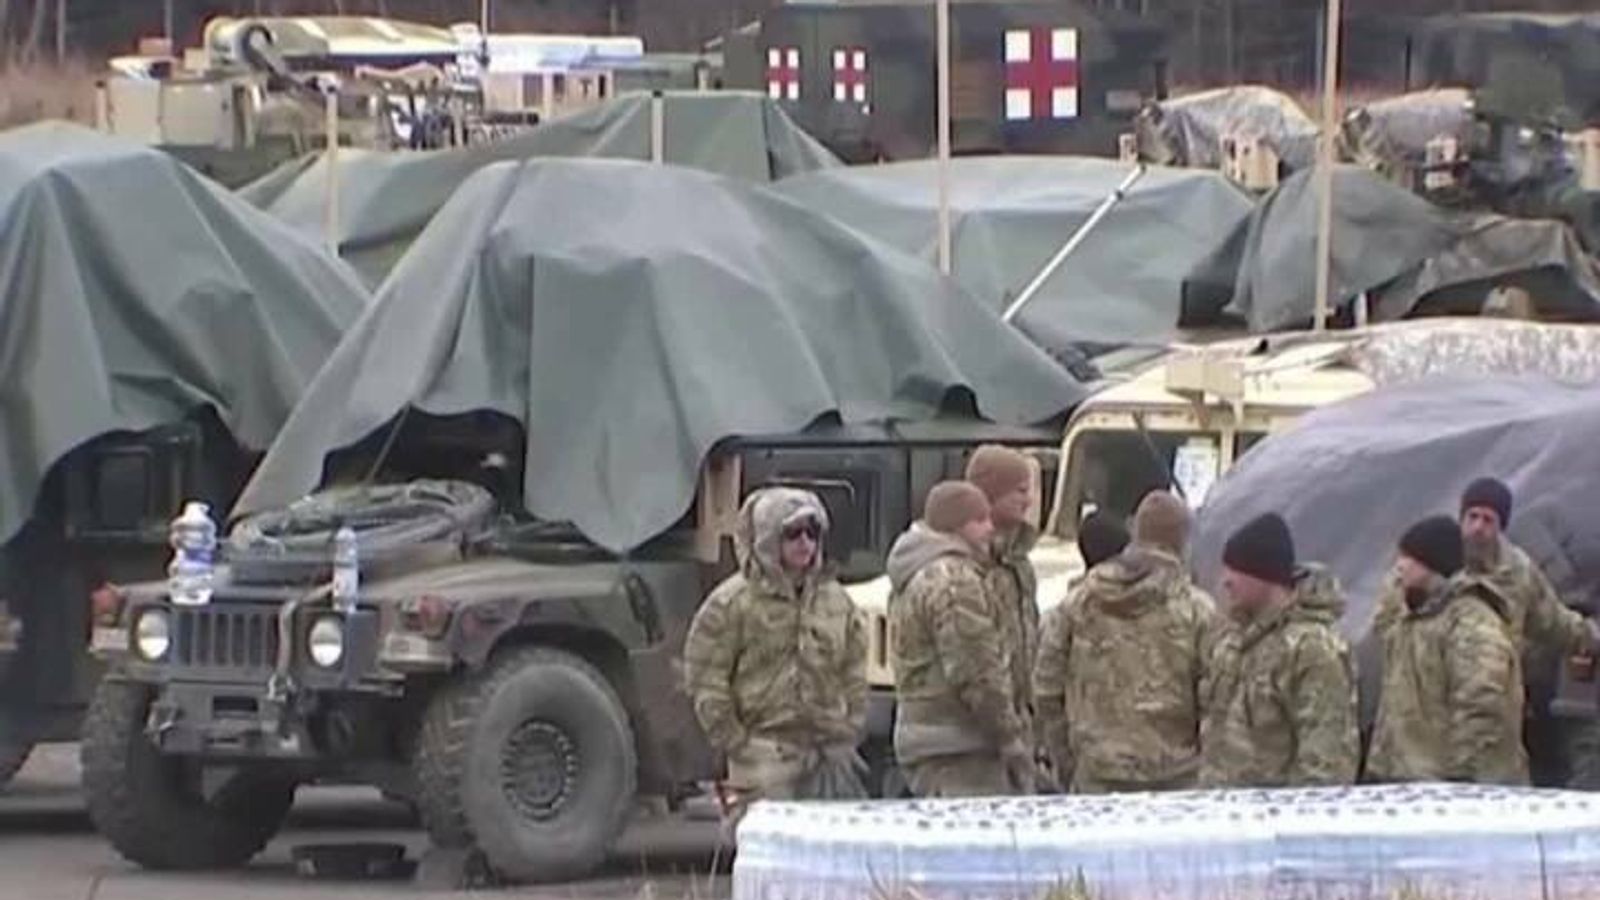 US troops set up camp in Poland near Ukraine border | News UK Video ...